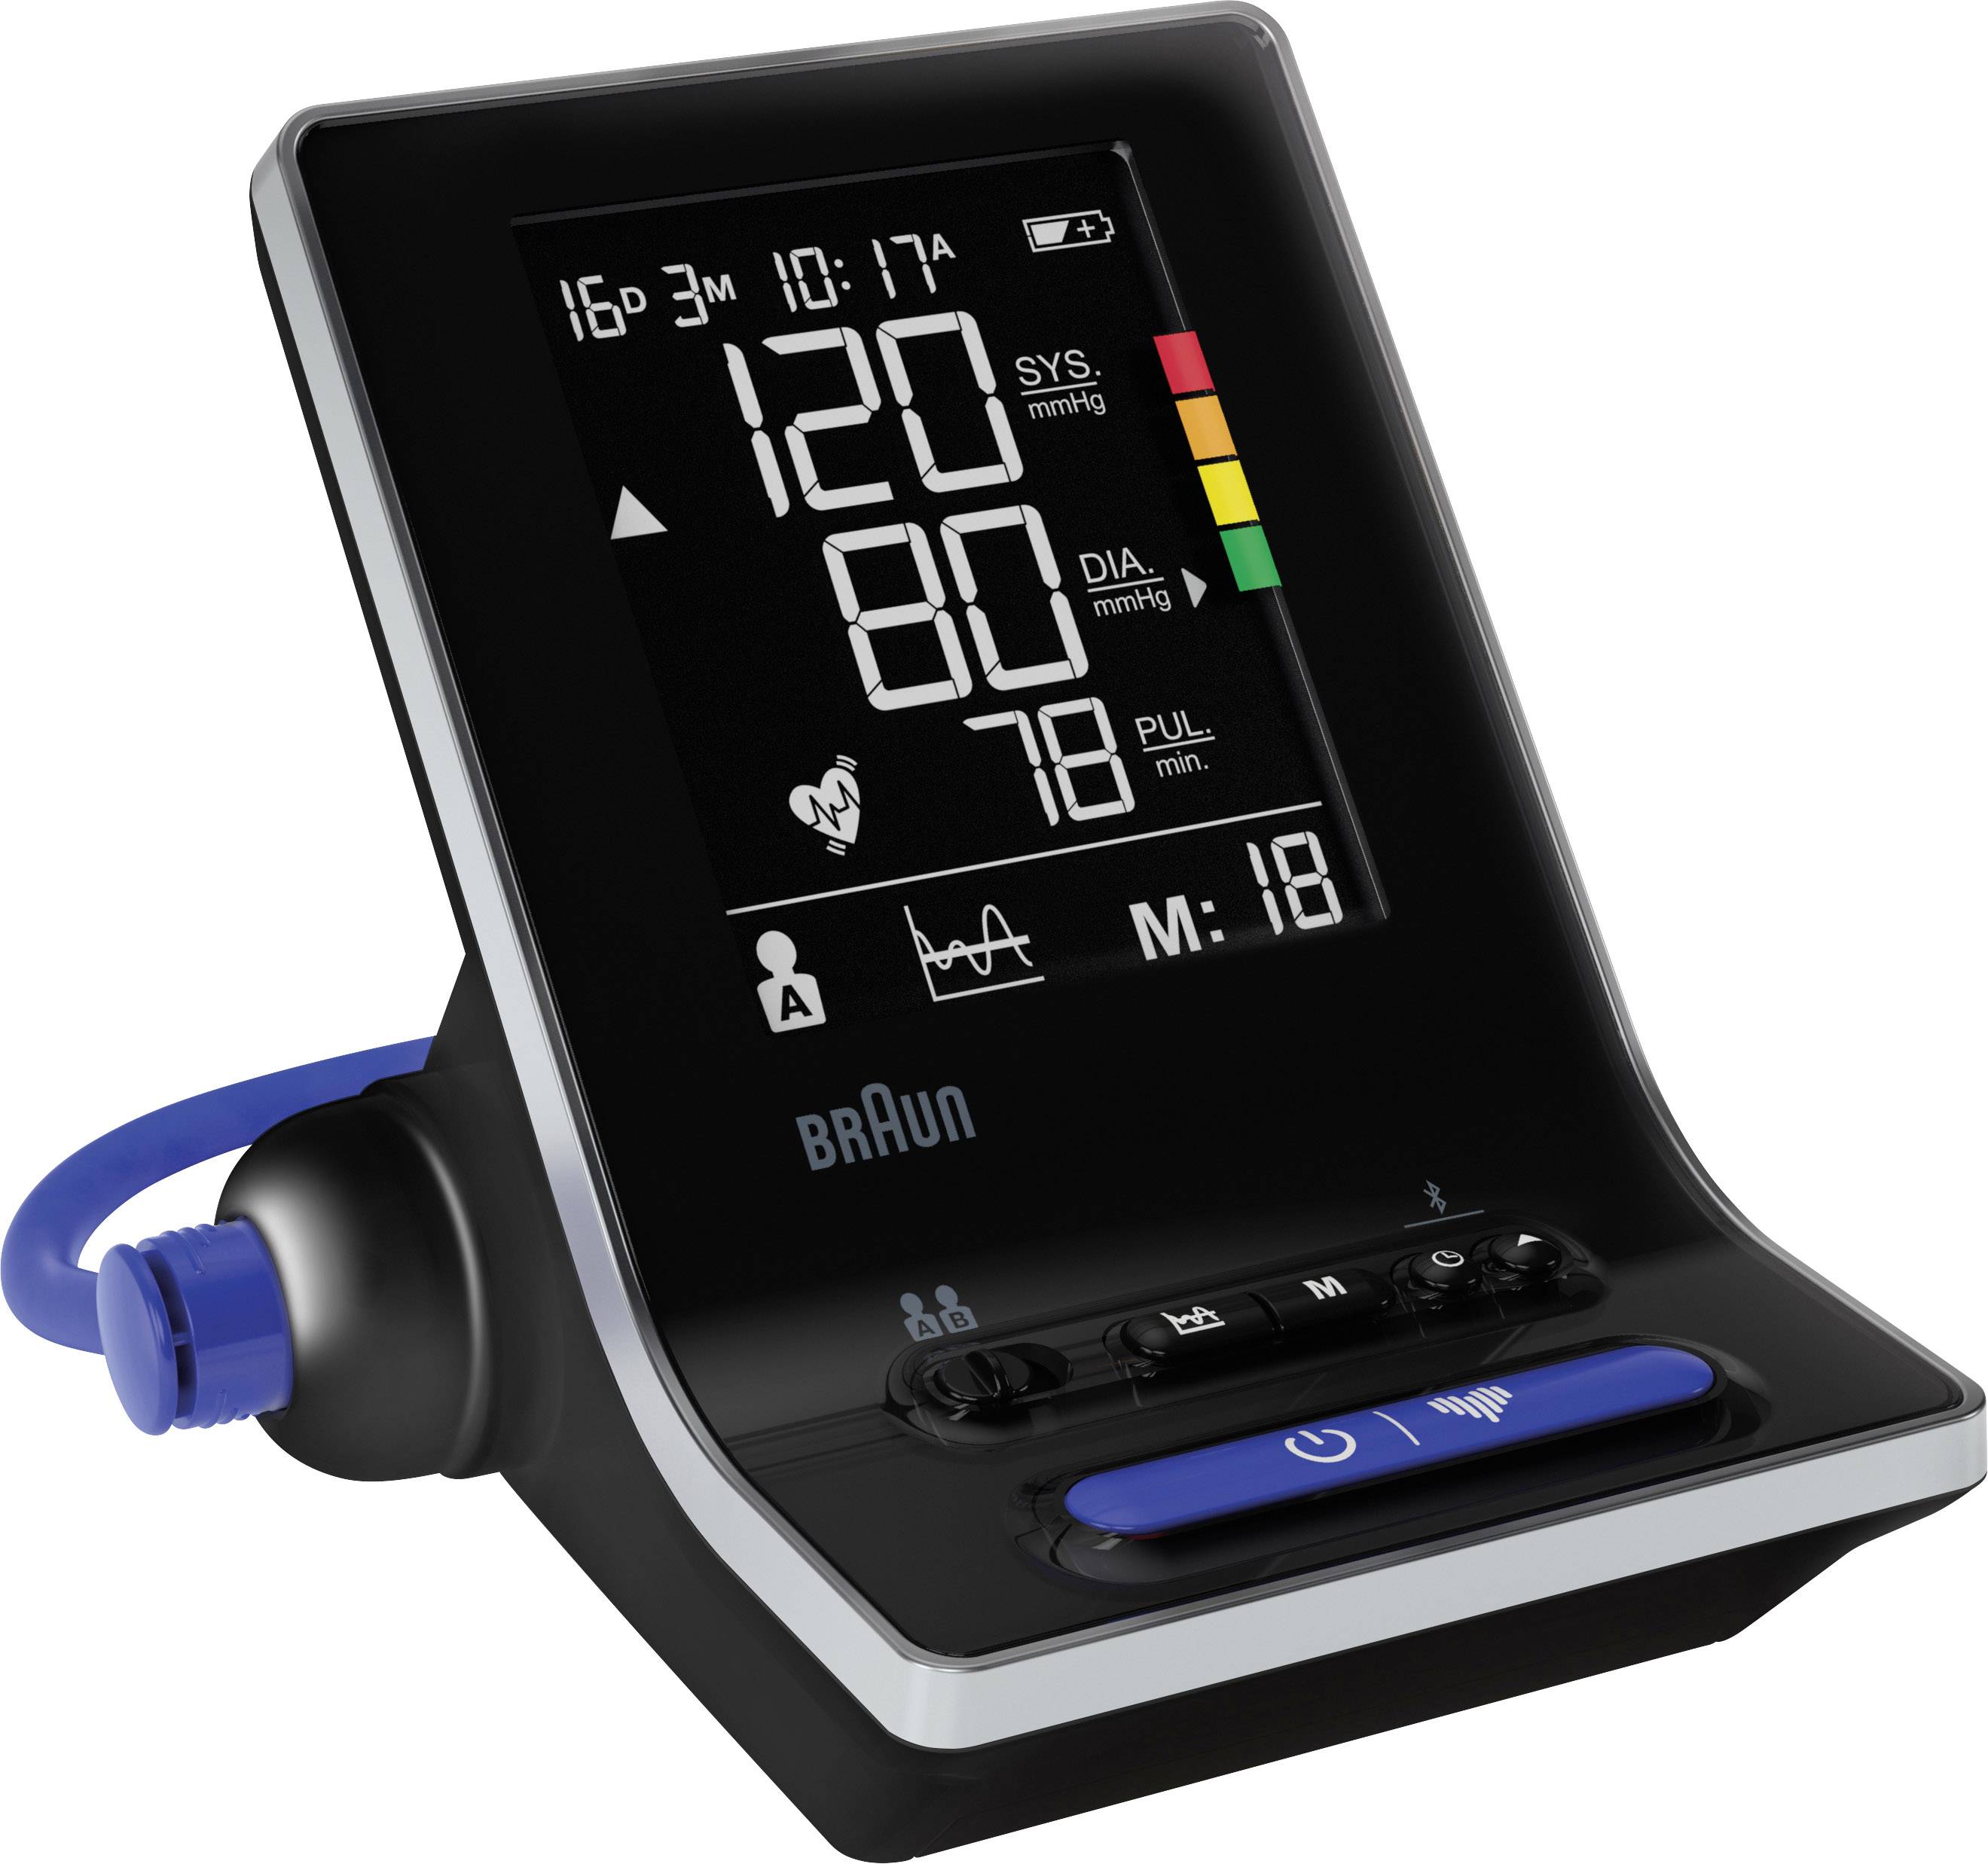 Braun BUA7200WE Activscantm9 Blood Pressure Monitor Clear